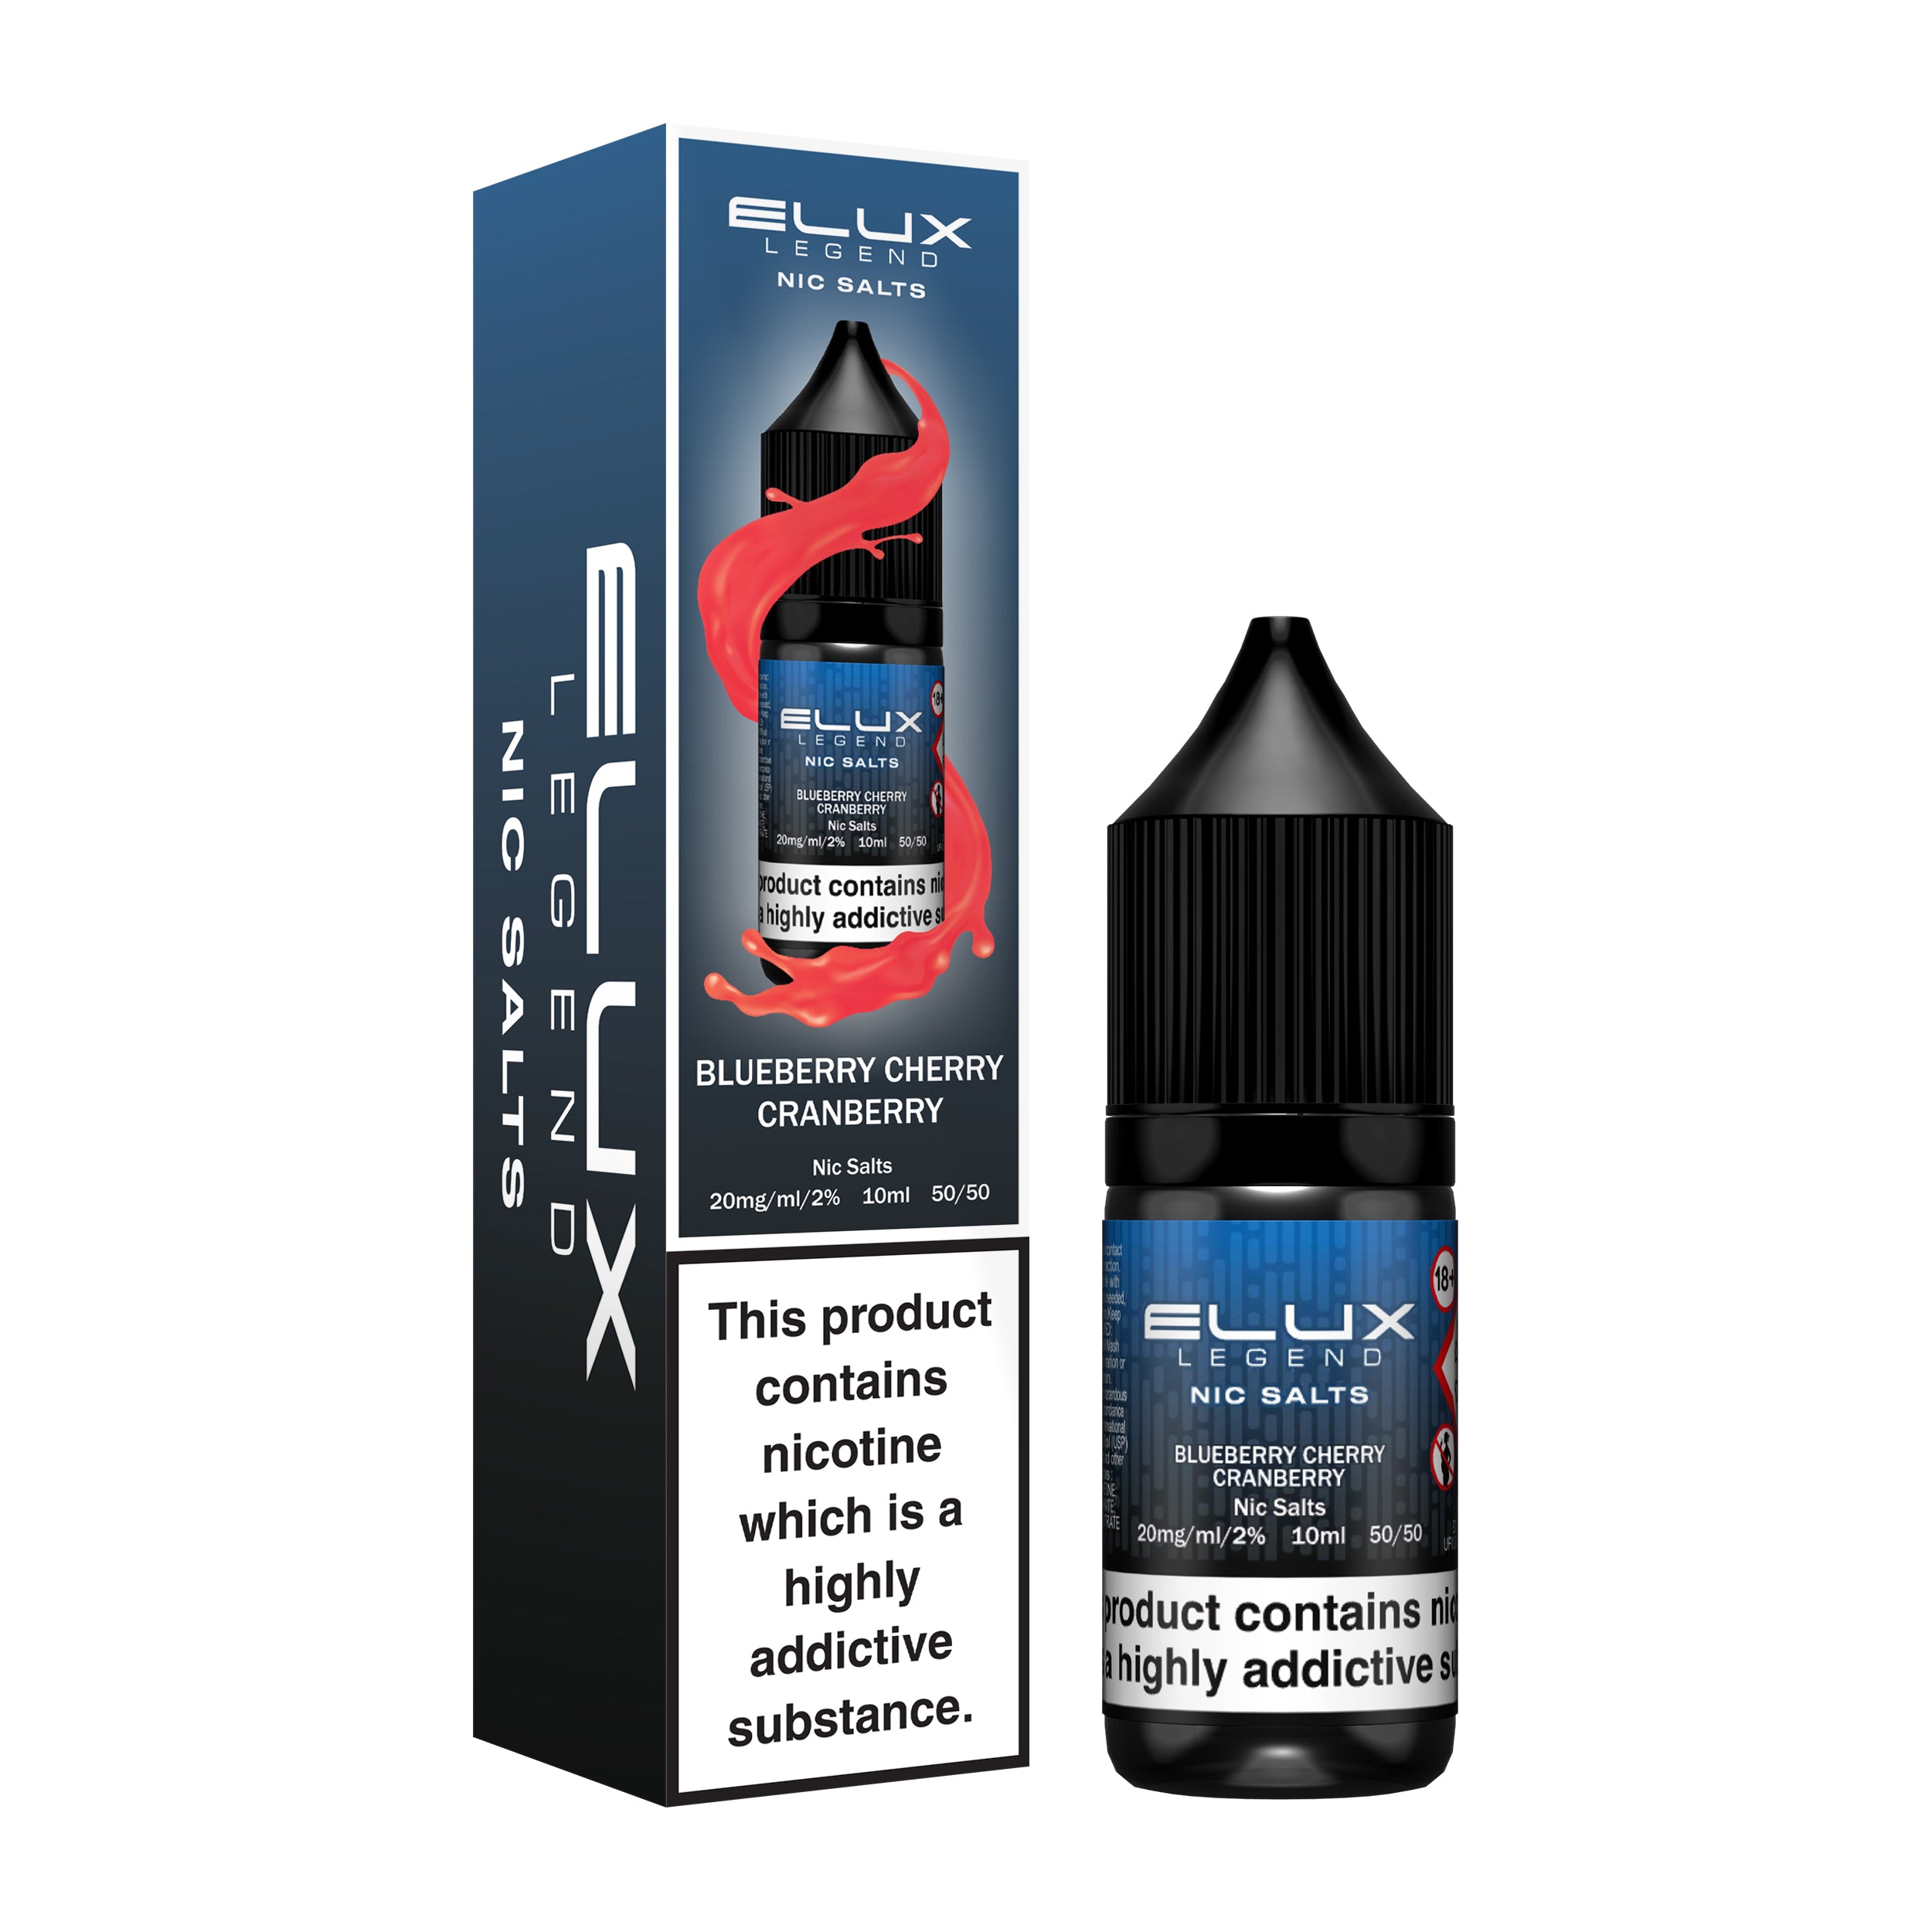 Bottle of Blueberry Cherry Cranberry Nic Salt E-Liquid by ELUX Legend